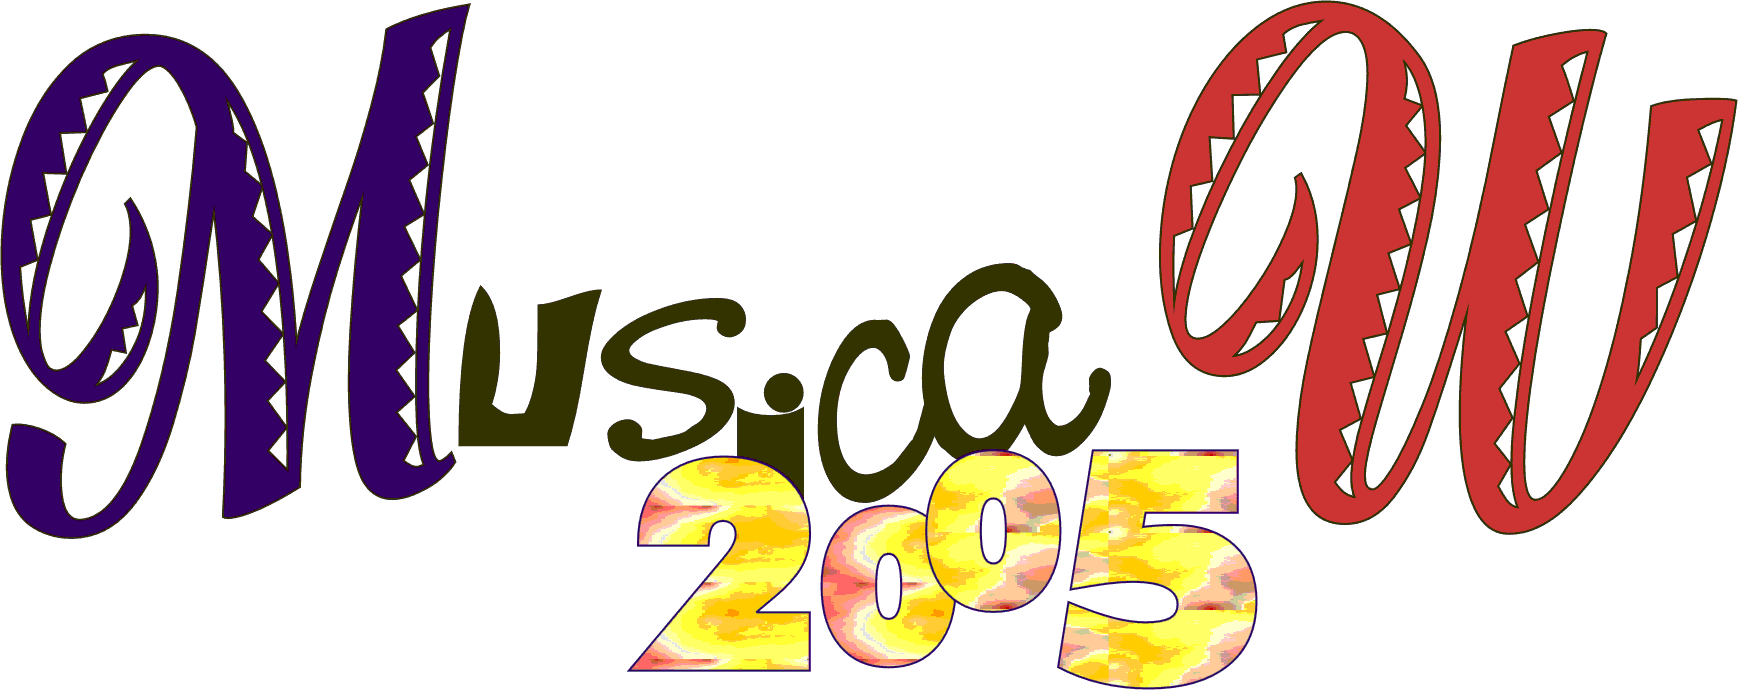 MUSICAW 2005